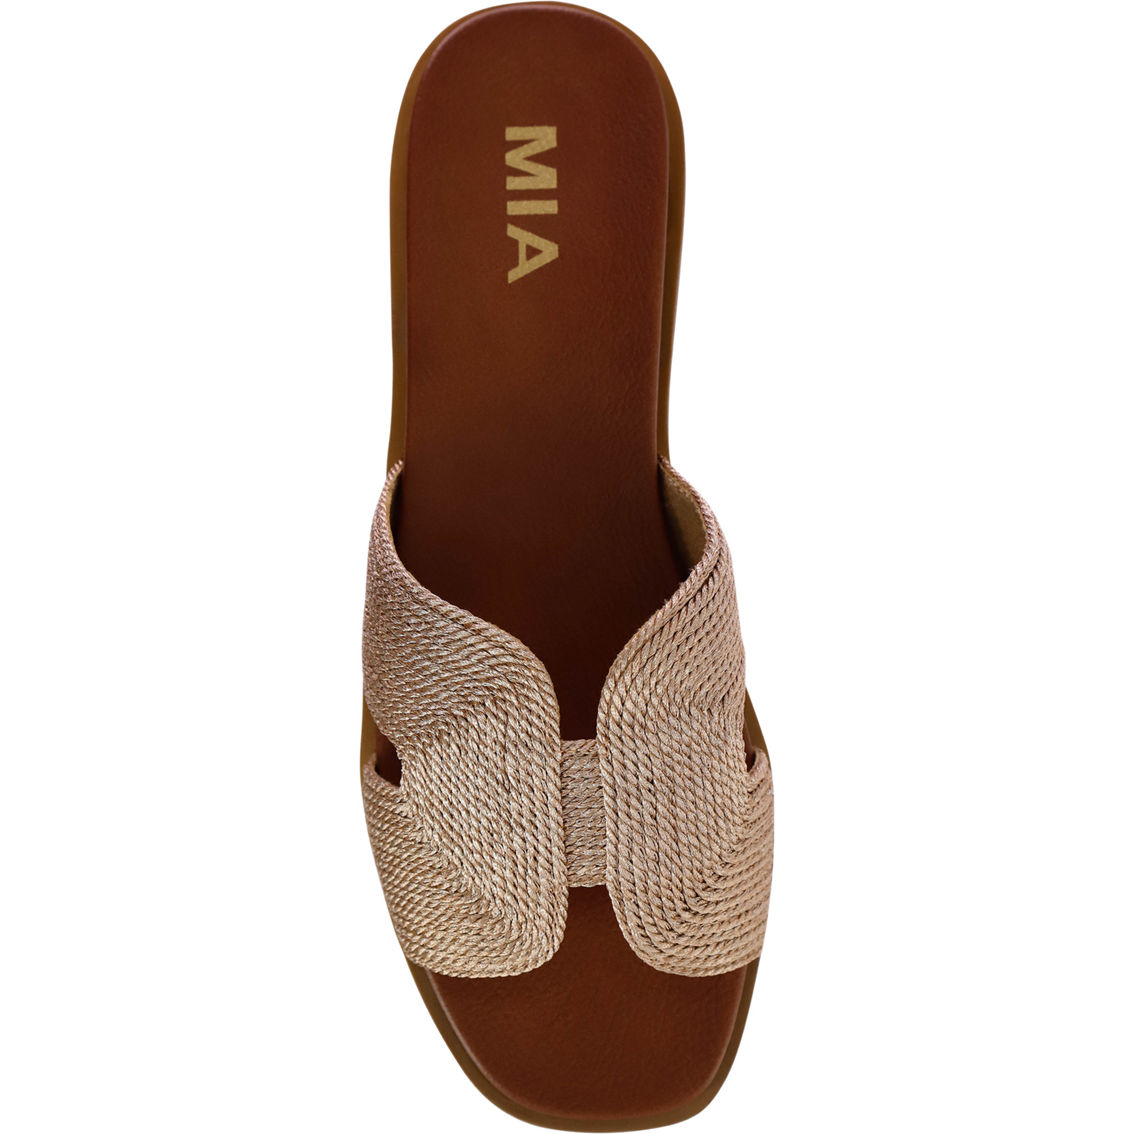 Mia Shoes Dia Sandals - Image 3 of 5